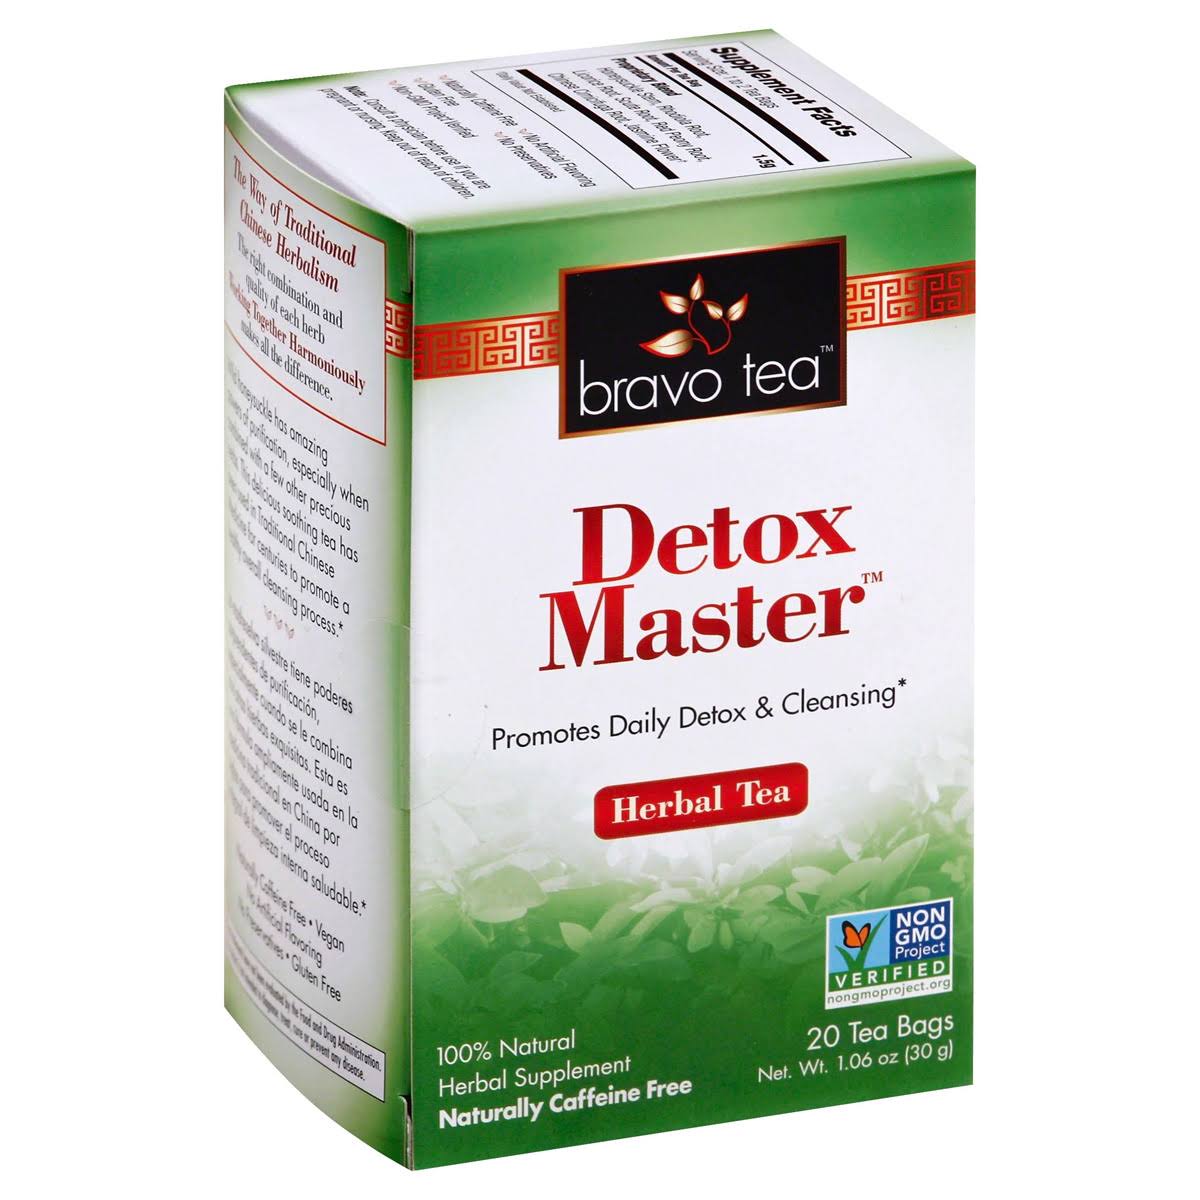 Bravo Tea Detox Master Herbal Tea - 20 Tea Bags, 30g